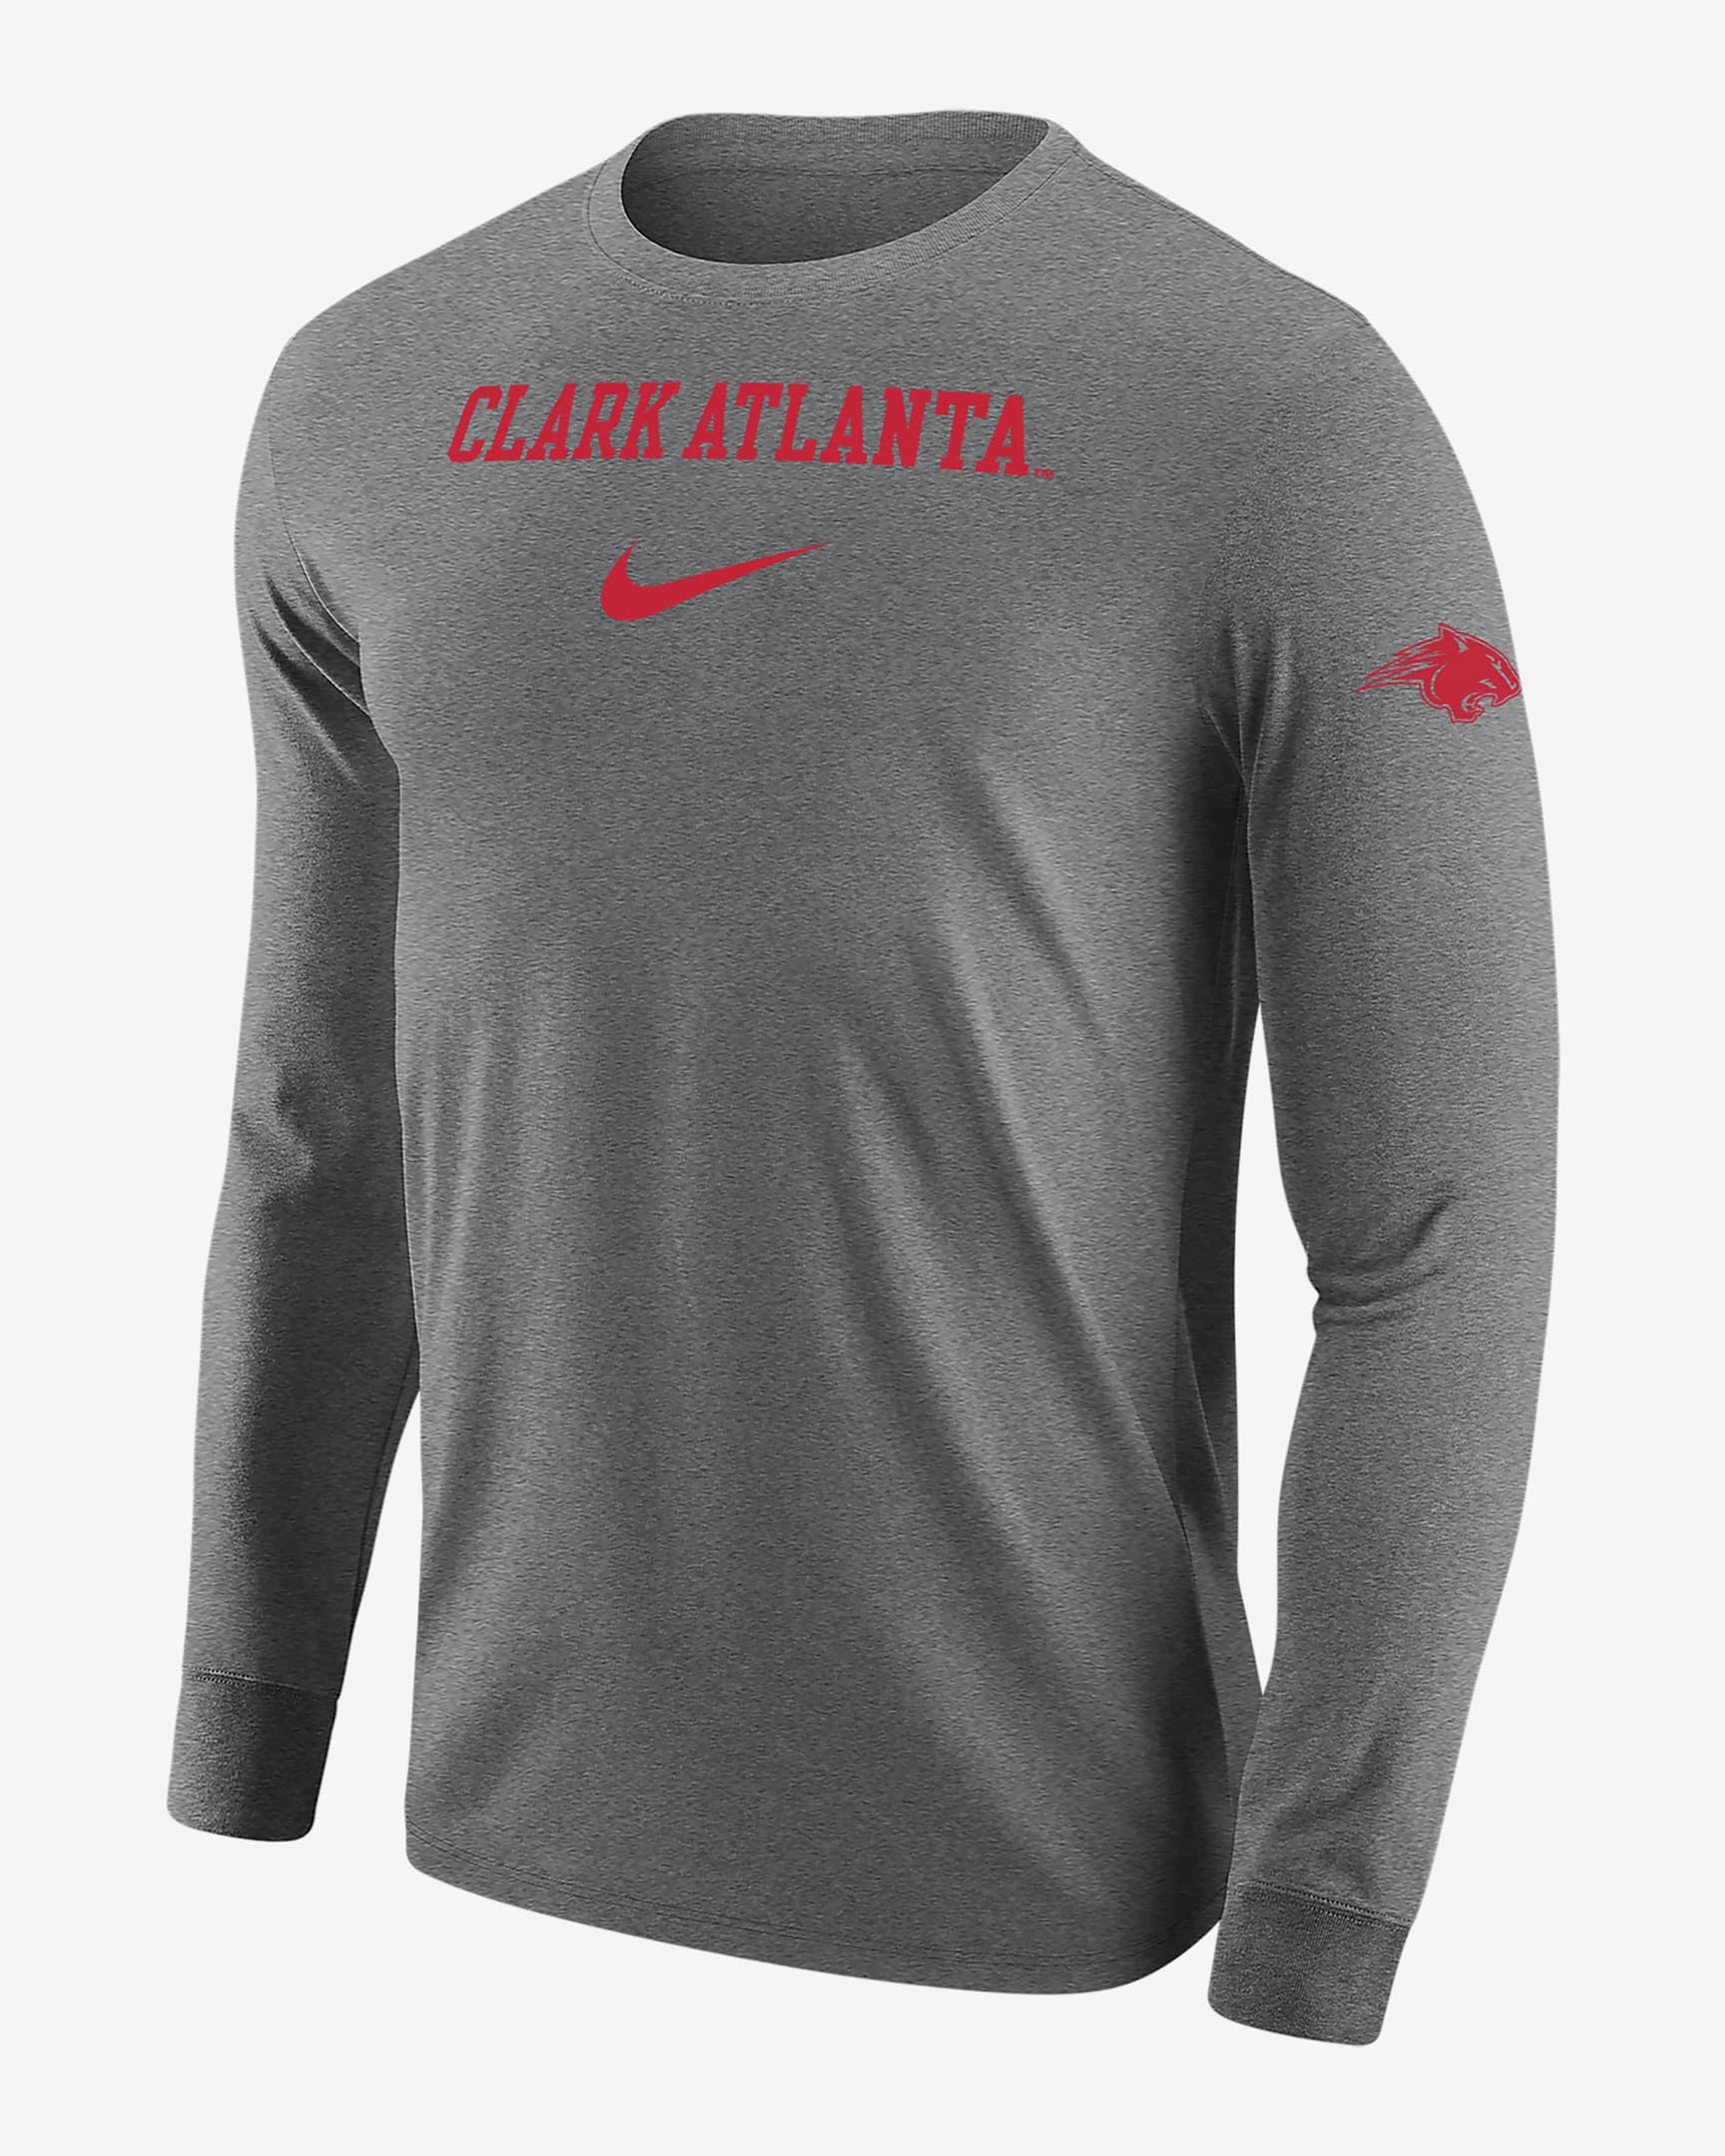 Clark Atlanta Men's Nike College Long-Sleeve T-Shirt. Nike.com